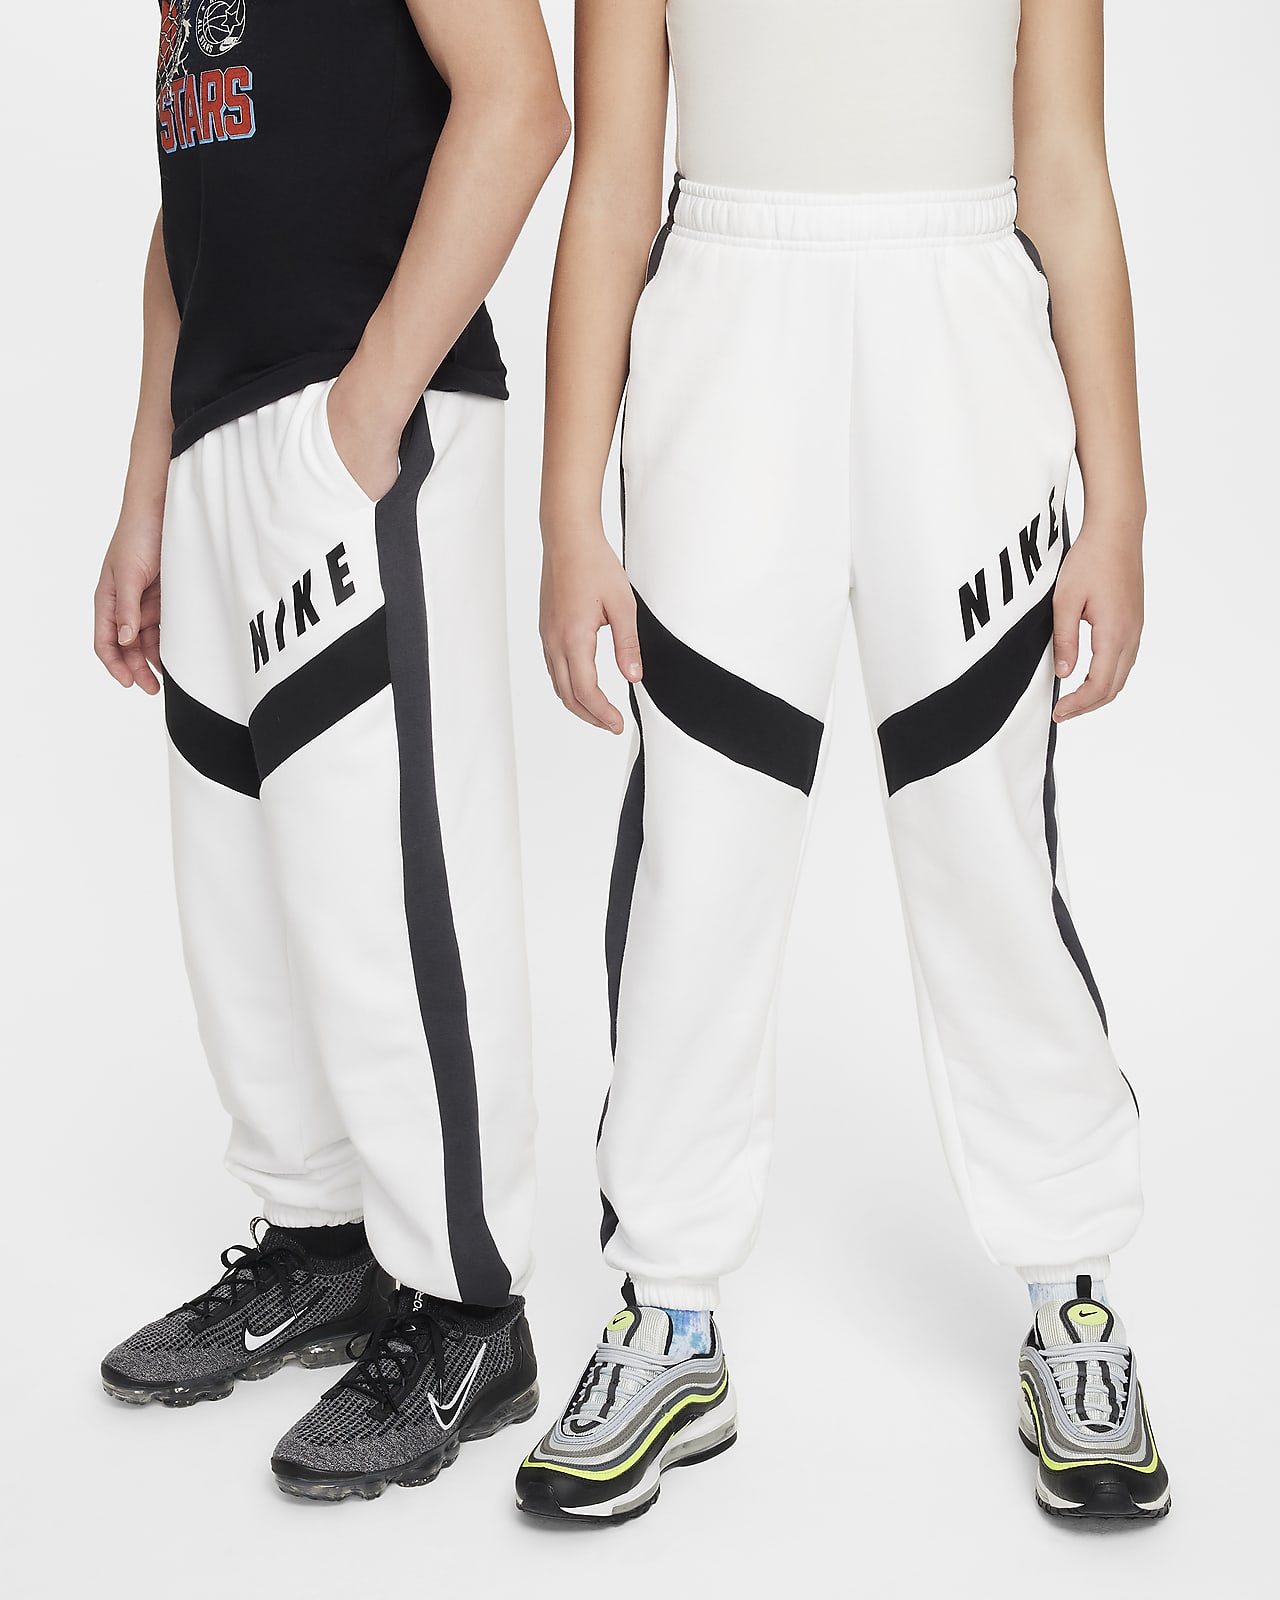 Nike Sportswear oversized joggingbroek van fleece voor meisjes